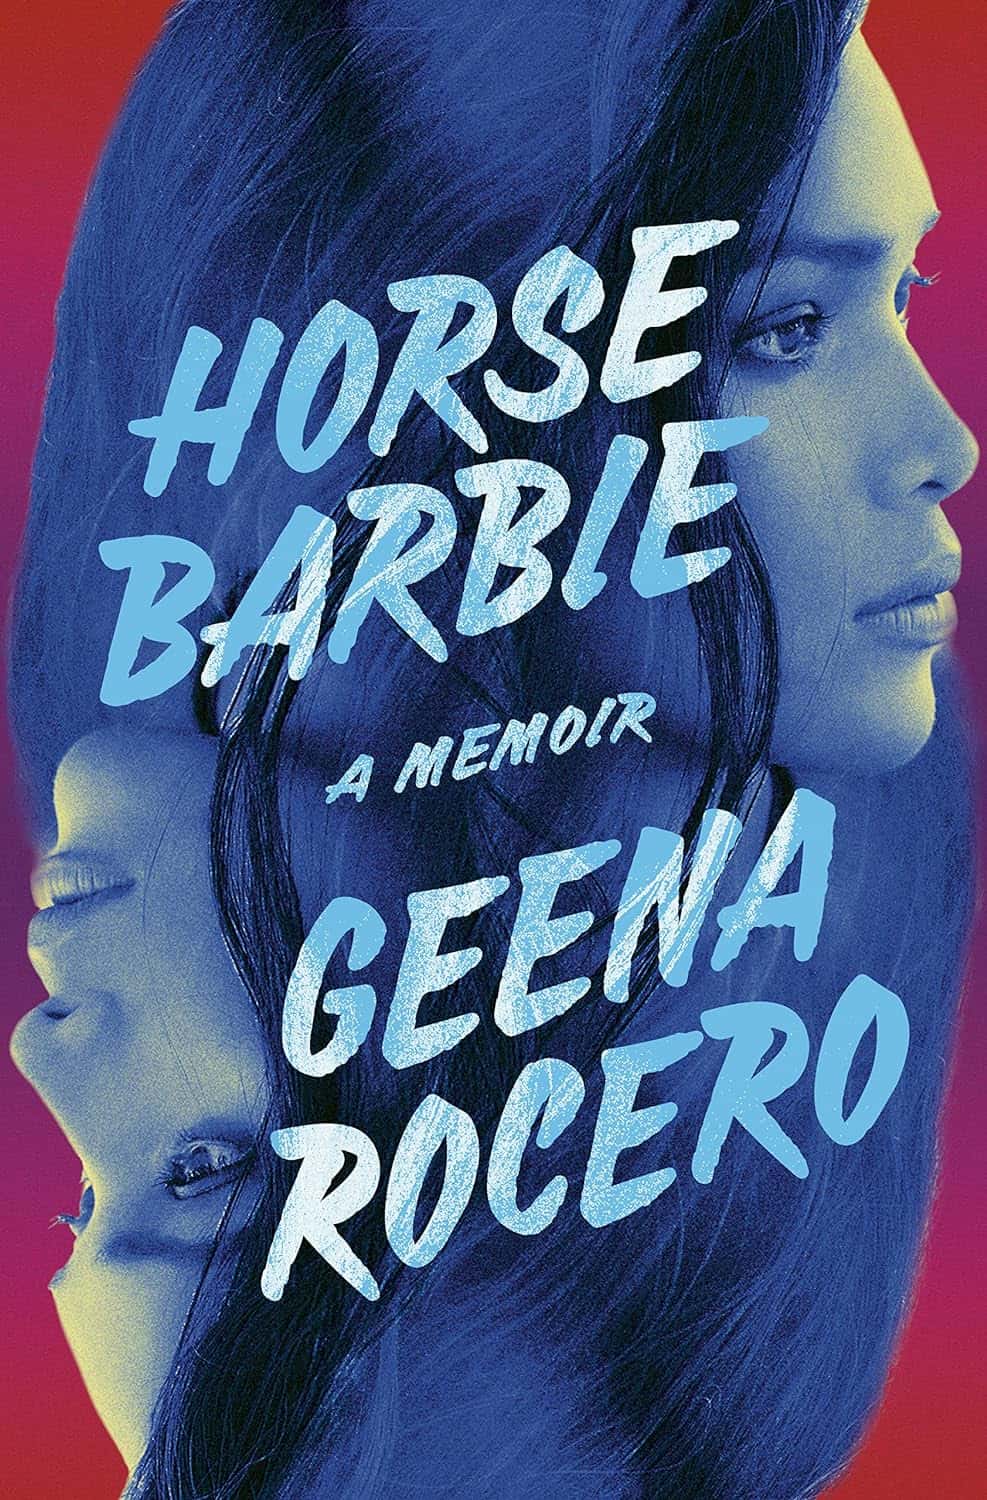 Horse Barbie, by Geena Rocero